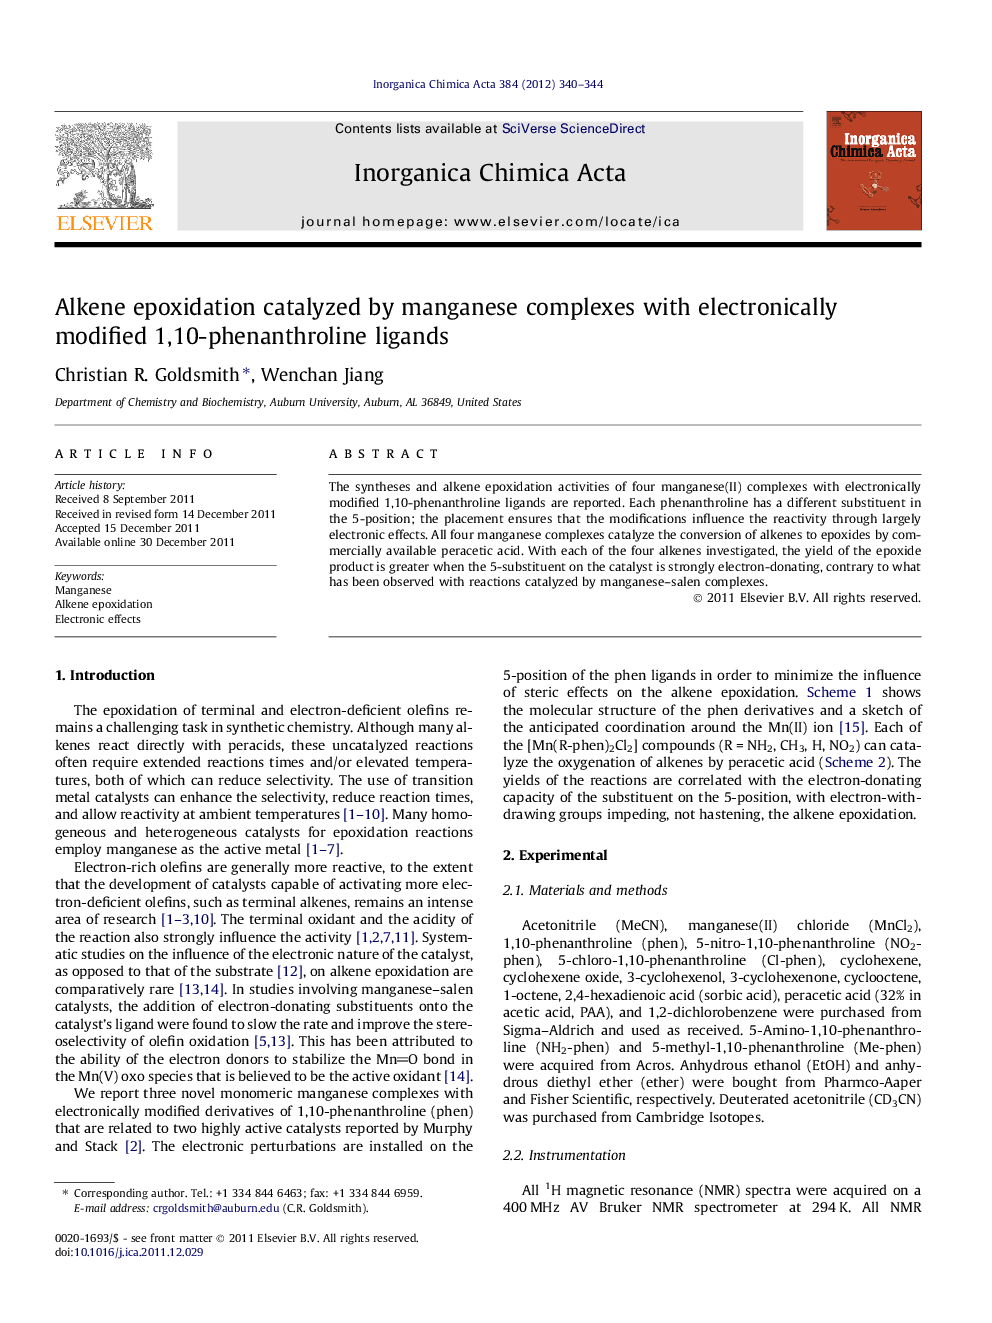 Alkene epoxidation catalyzed by manganese complexes with electronically modified 1,10-phenanthroline ligands